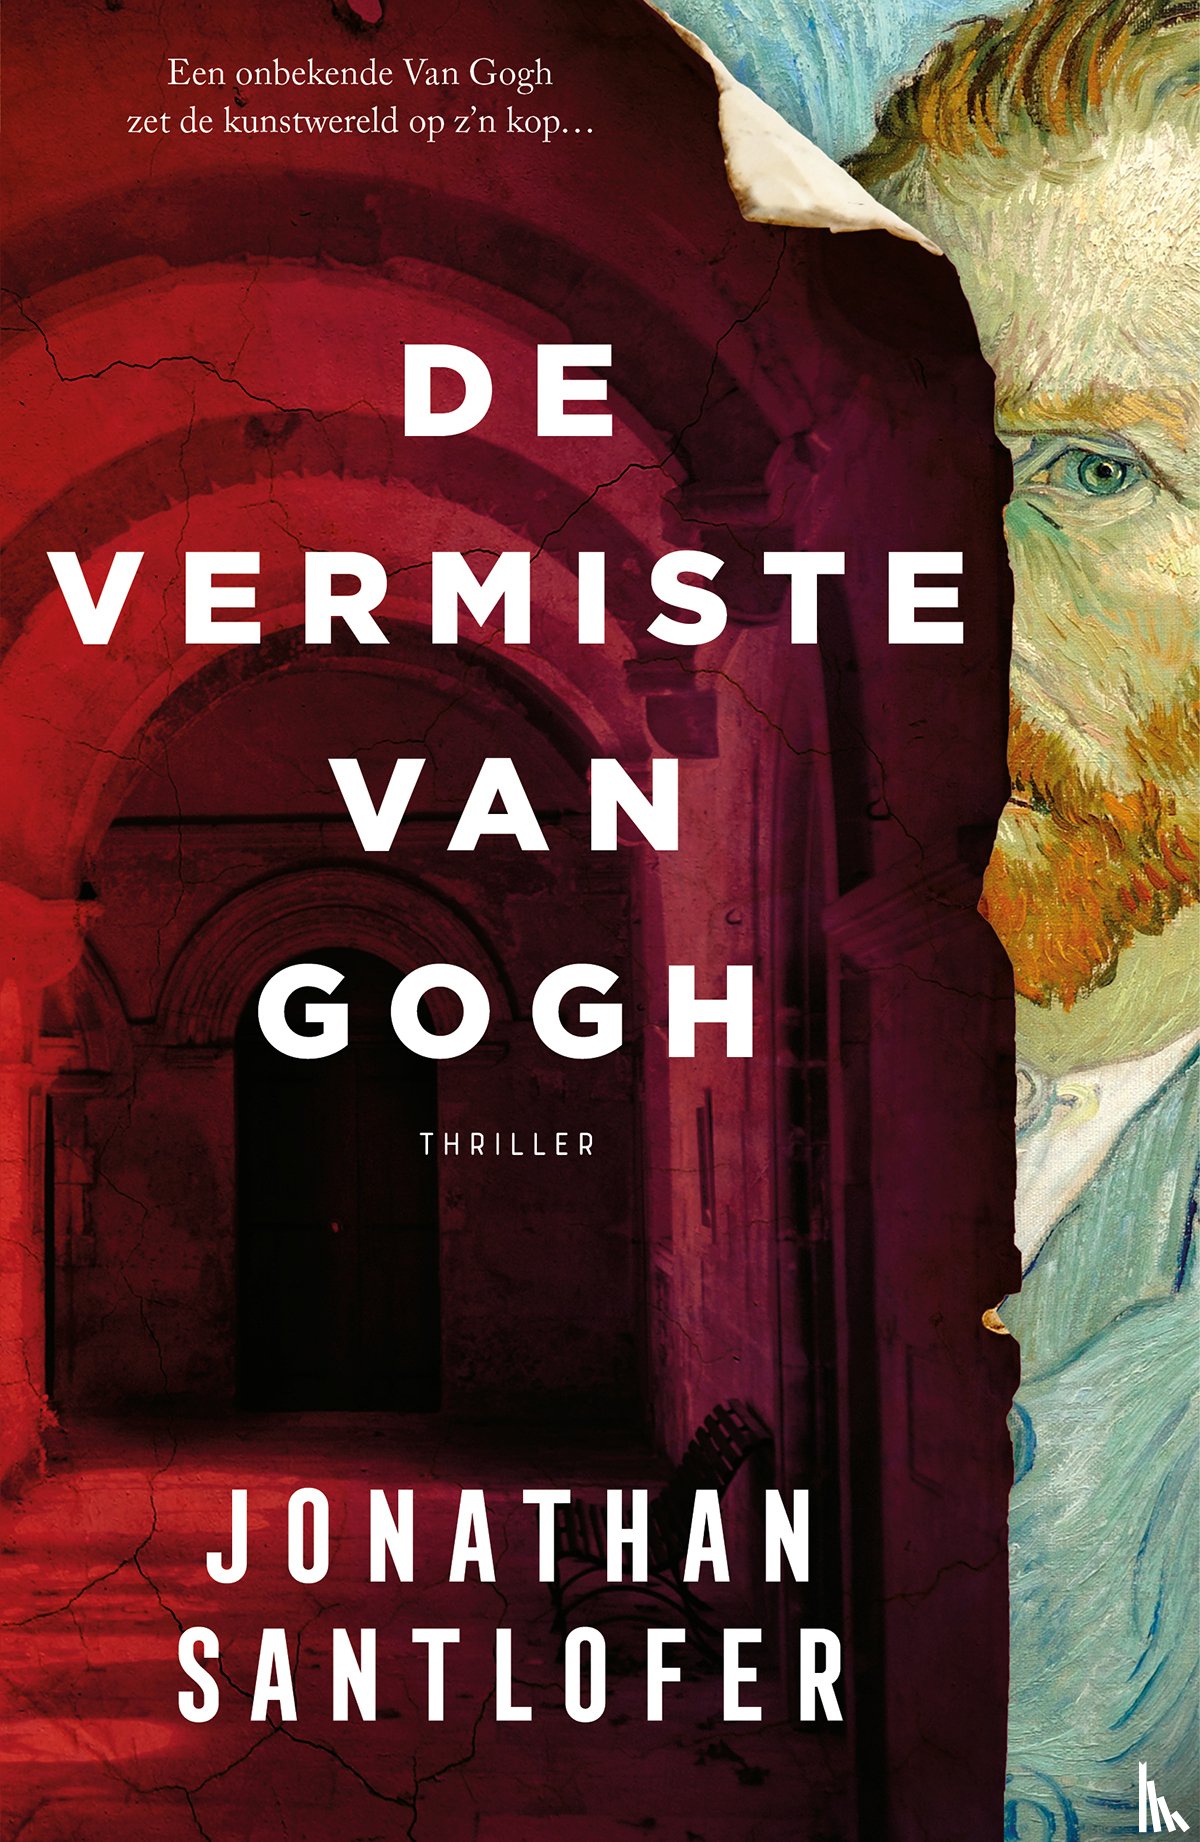 Santlofer, Jonathan - De vermiste Van Gogh